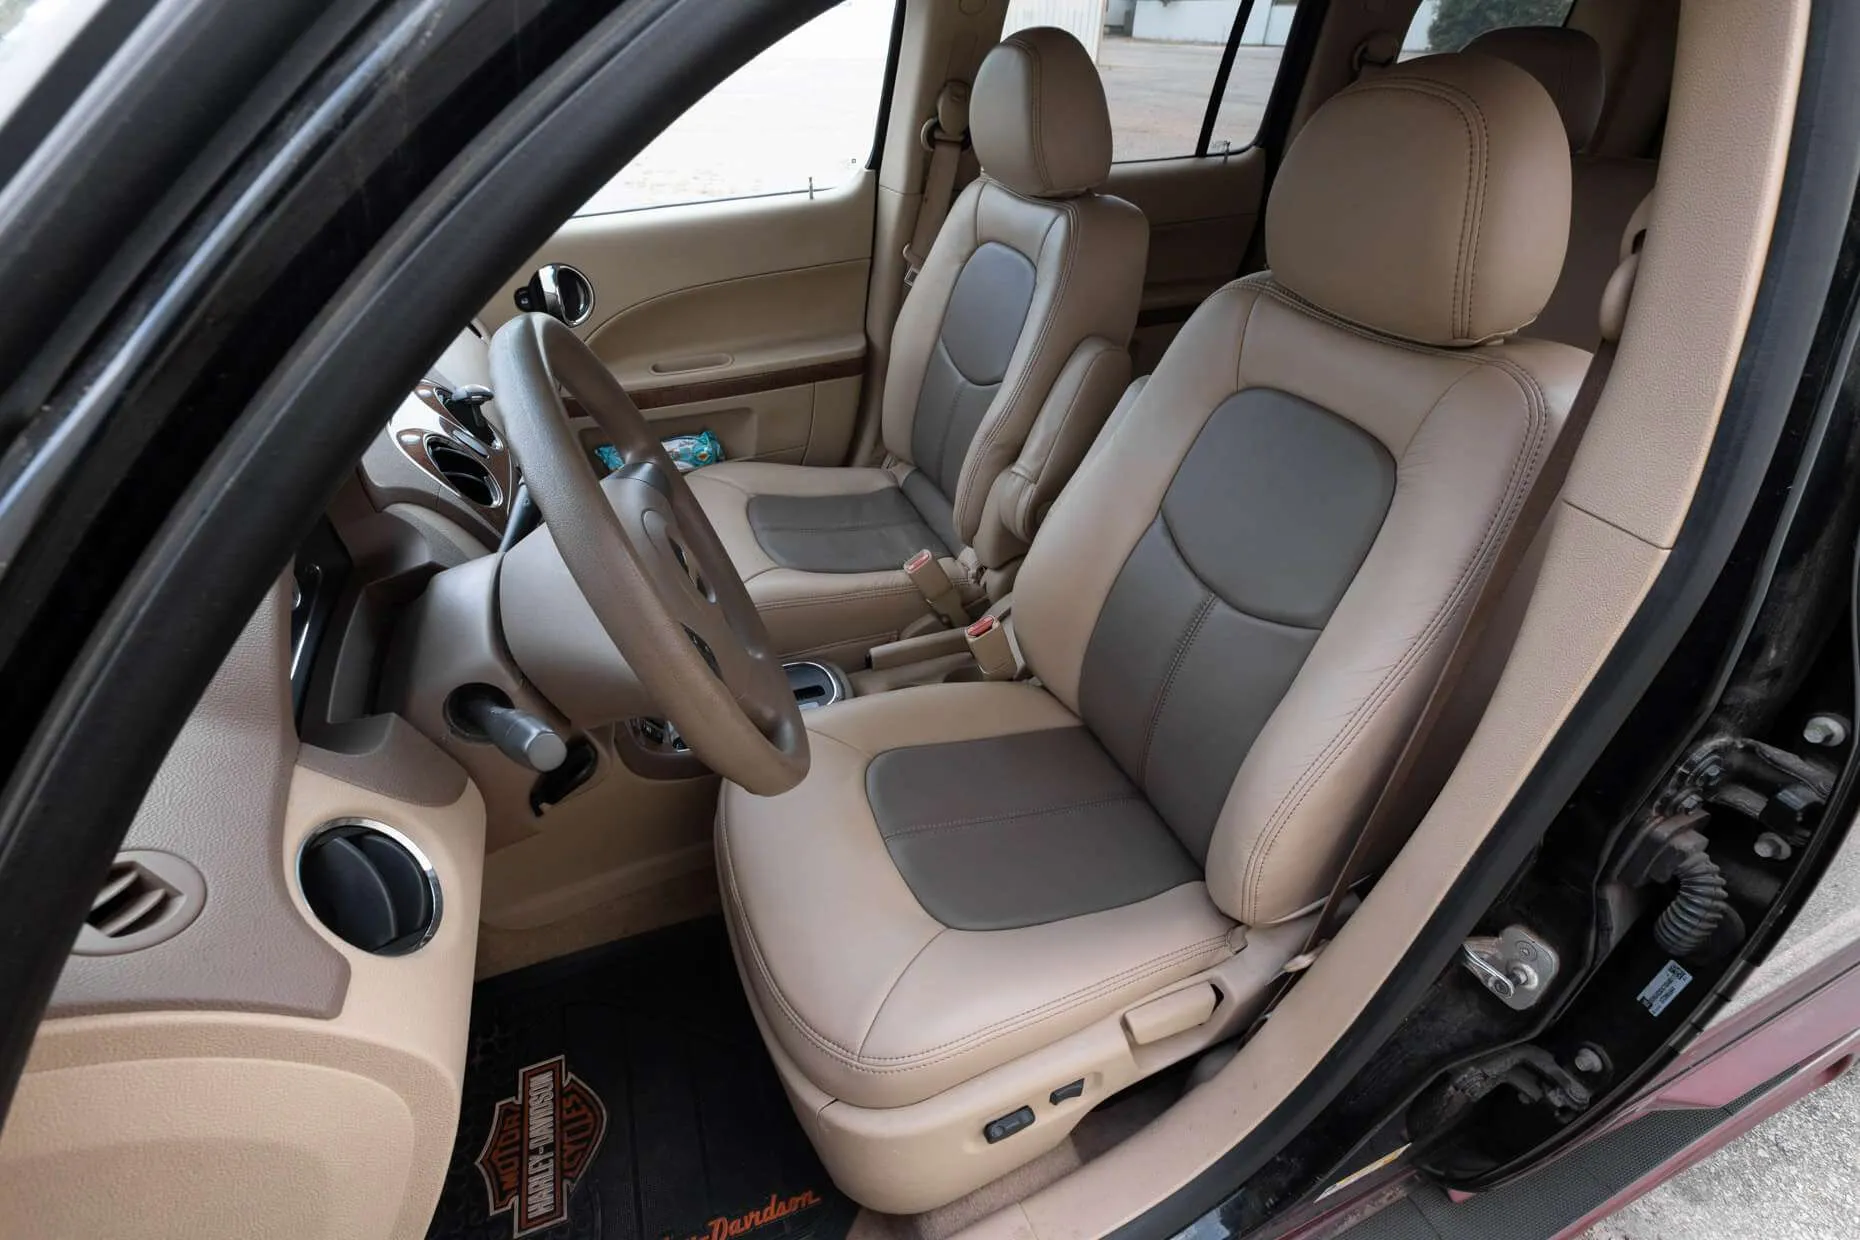 2006-2011 Chevrolet HHR Leather Seat Interior Kit - Featured Image